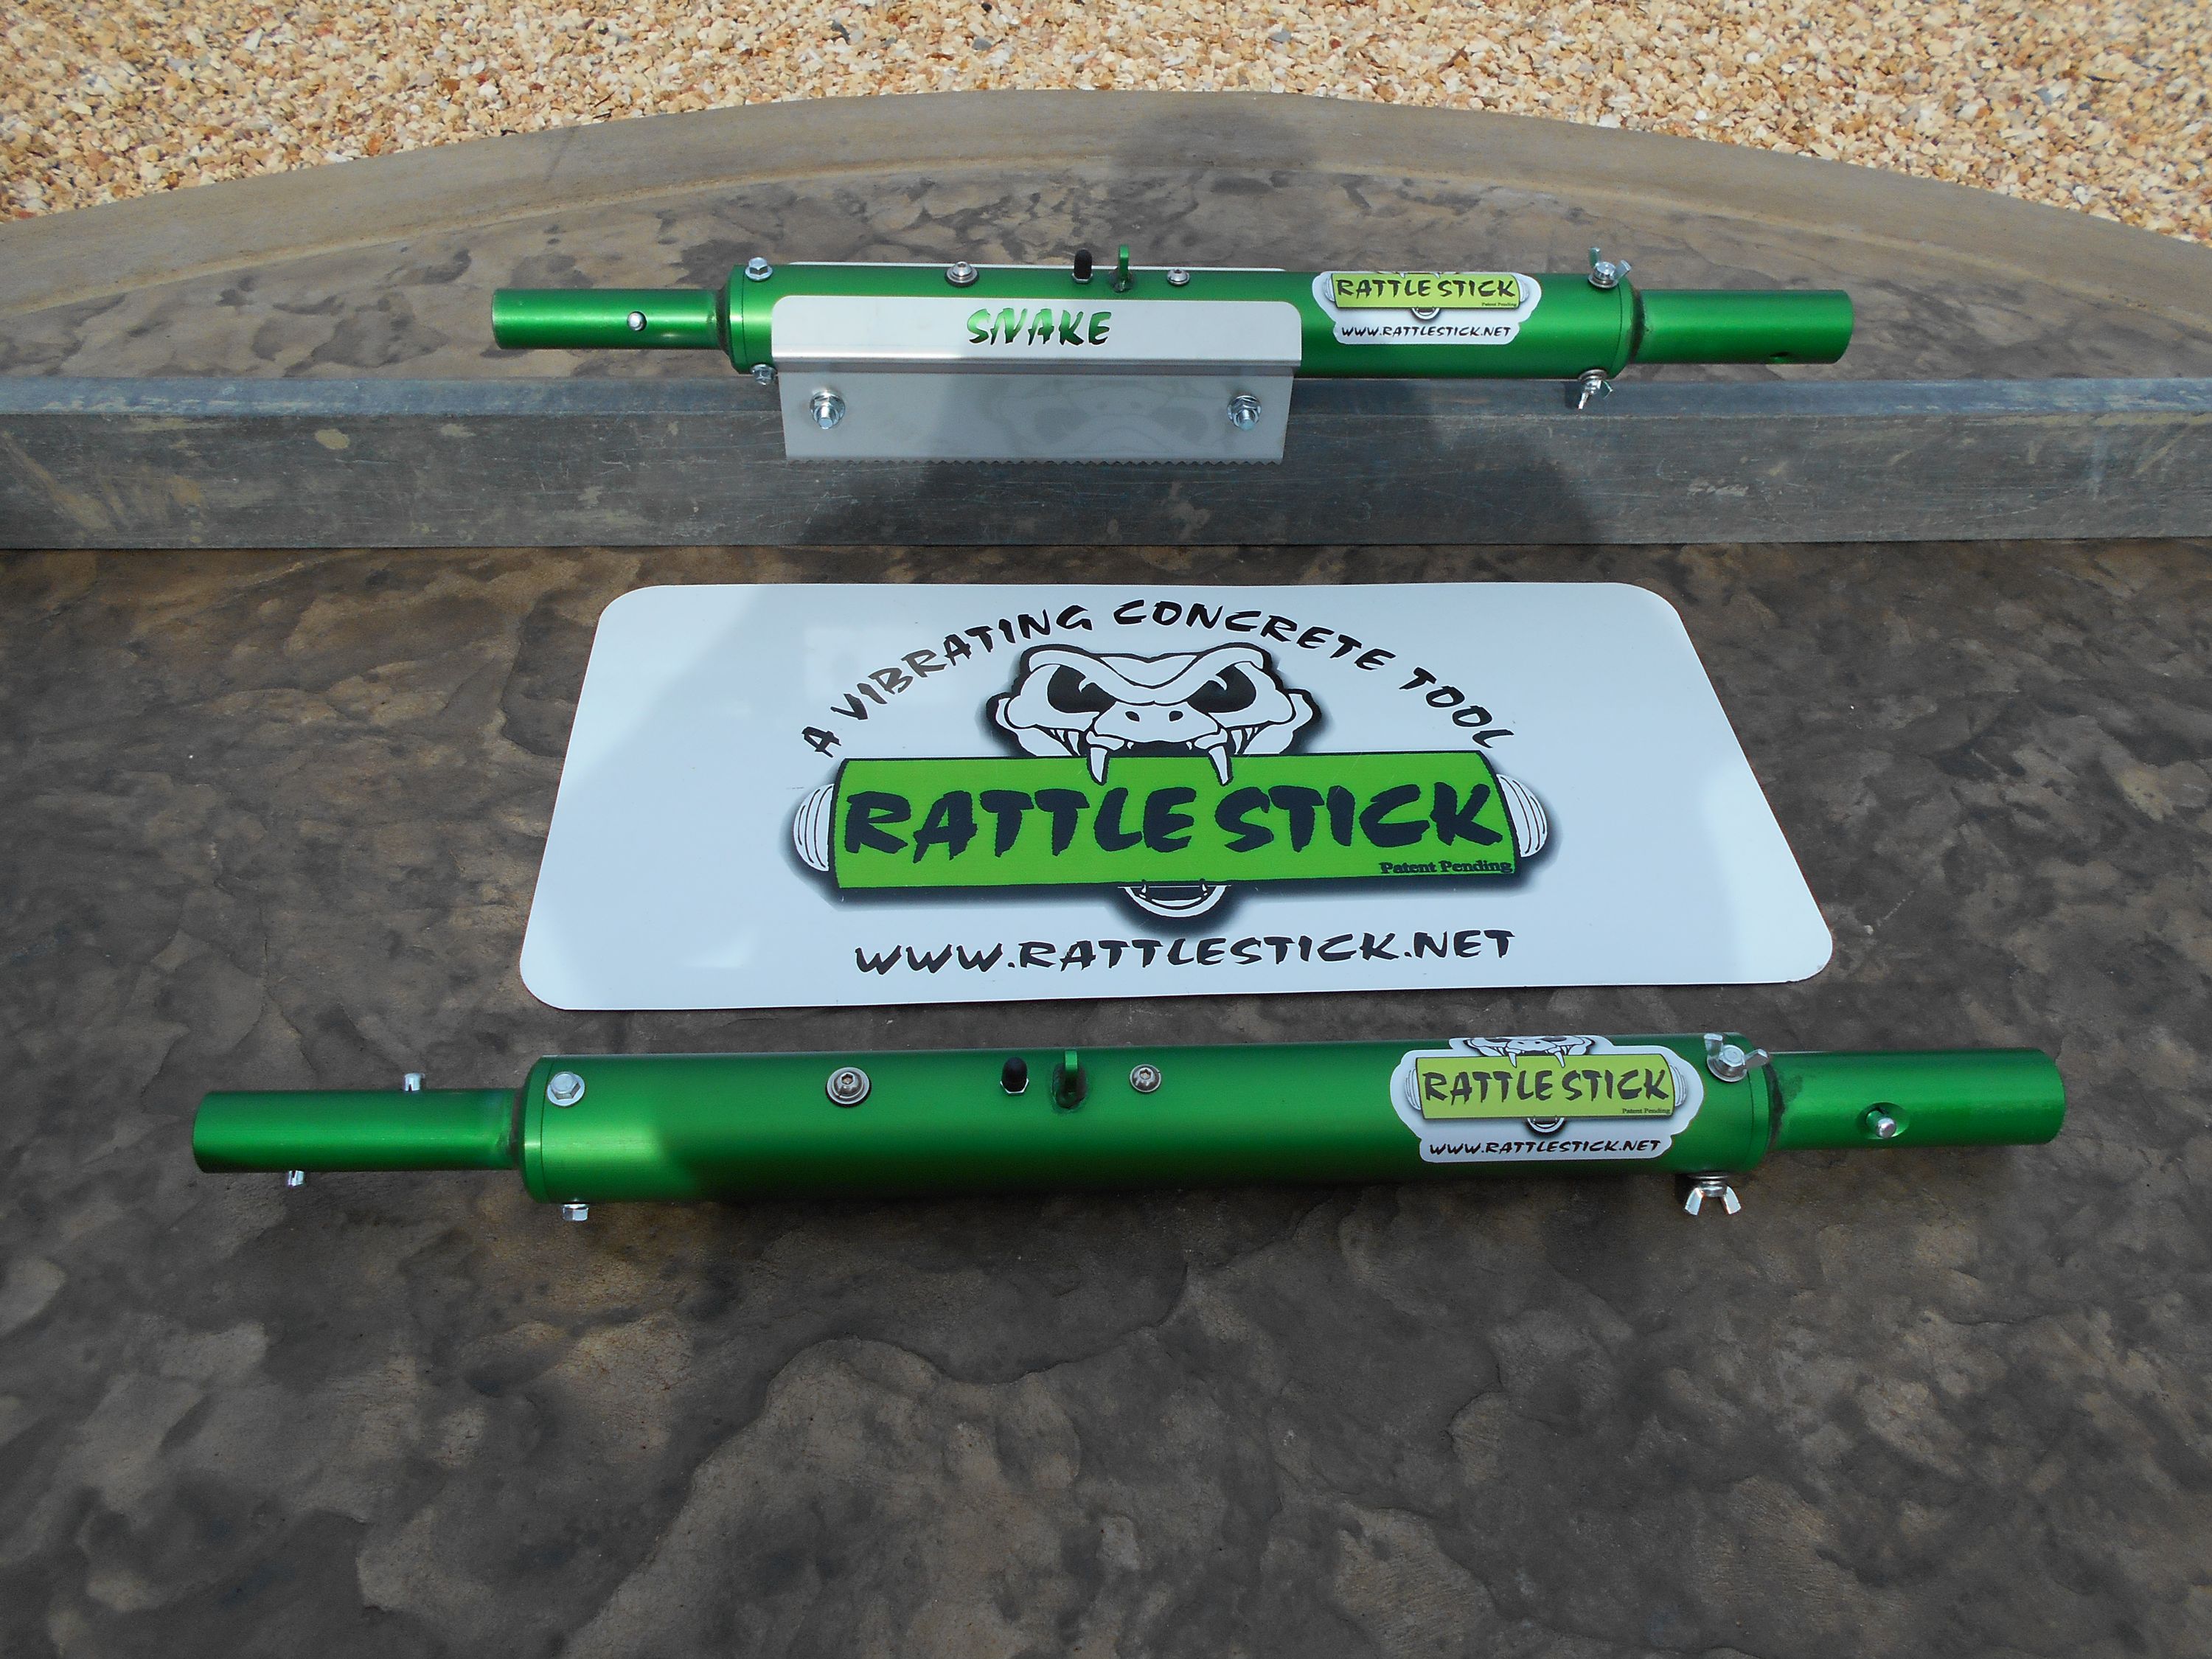 Rattle Stick tool now has more bite - Concrete Decor